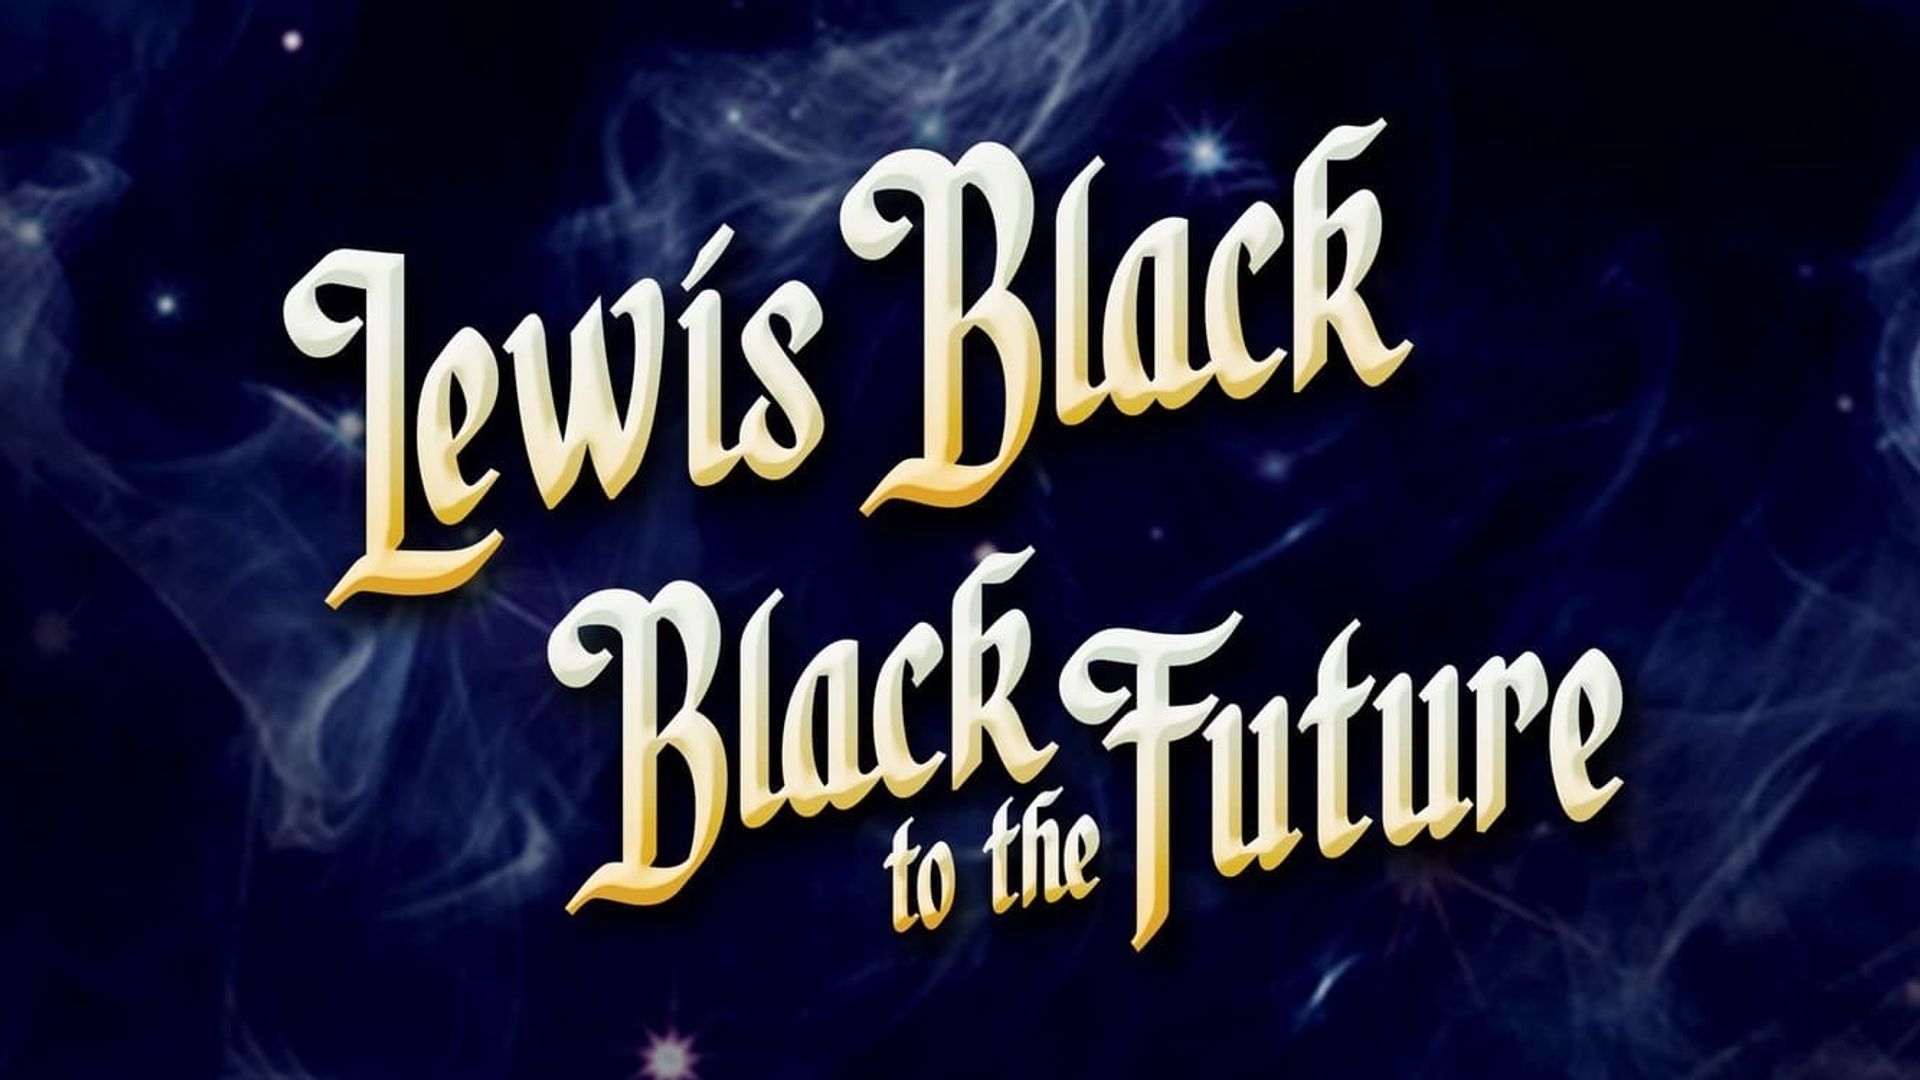 Lewis Black: Black to the Future background